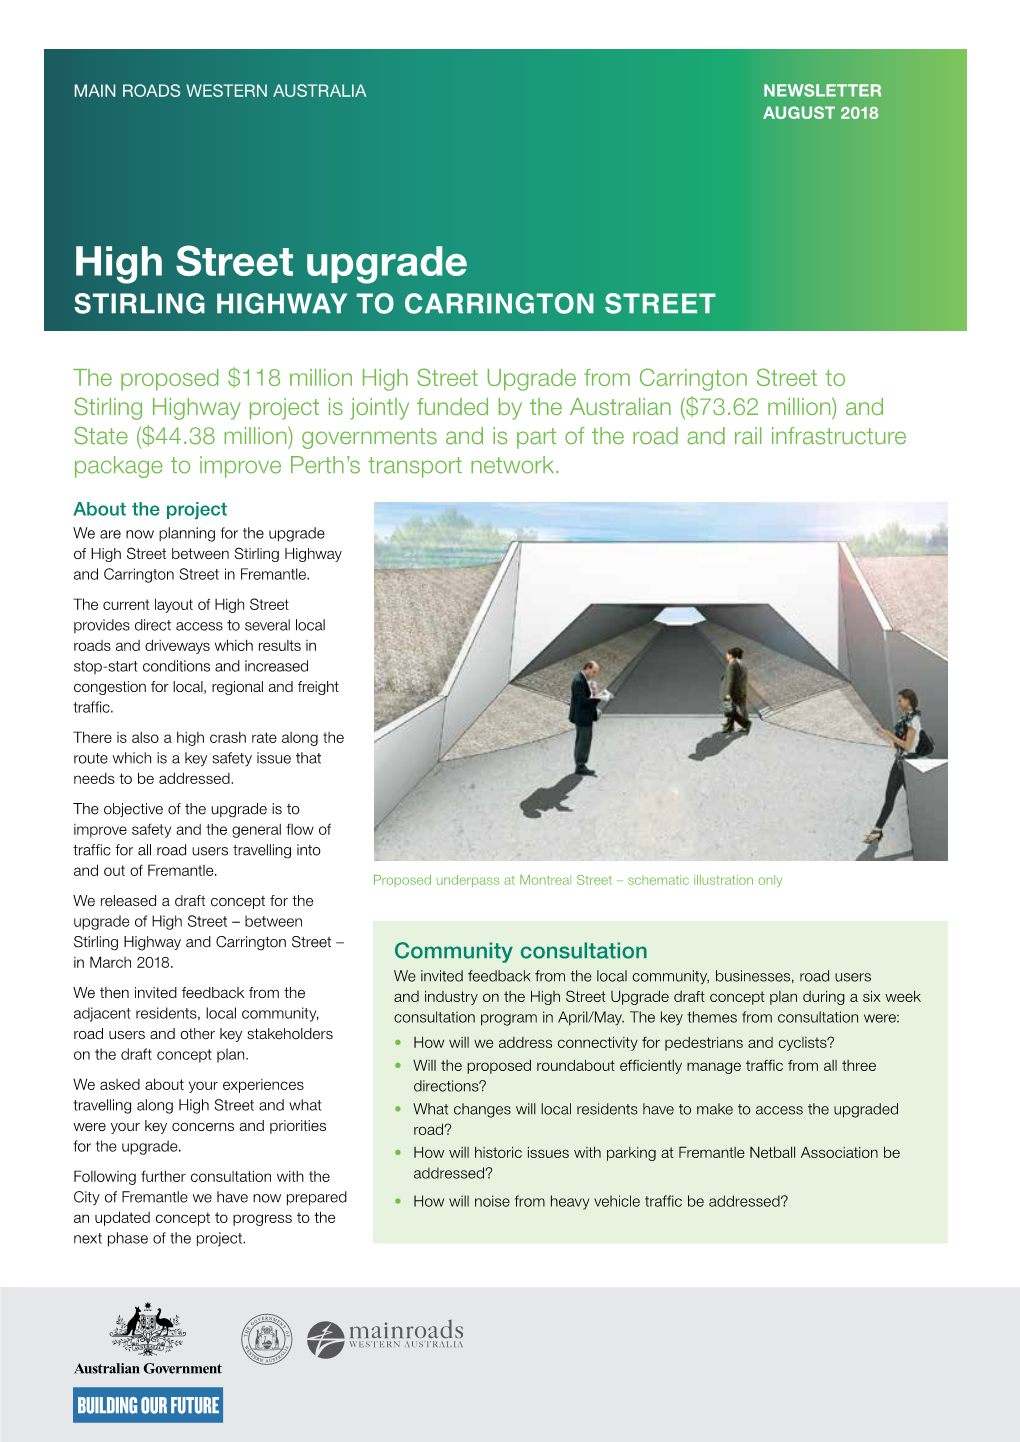 High Street Upgrade STIRLING HIGHWAY to CARRINGTON STREET